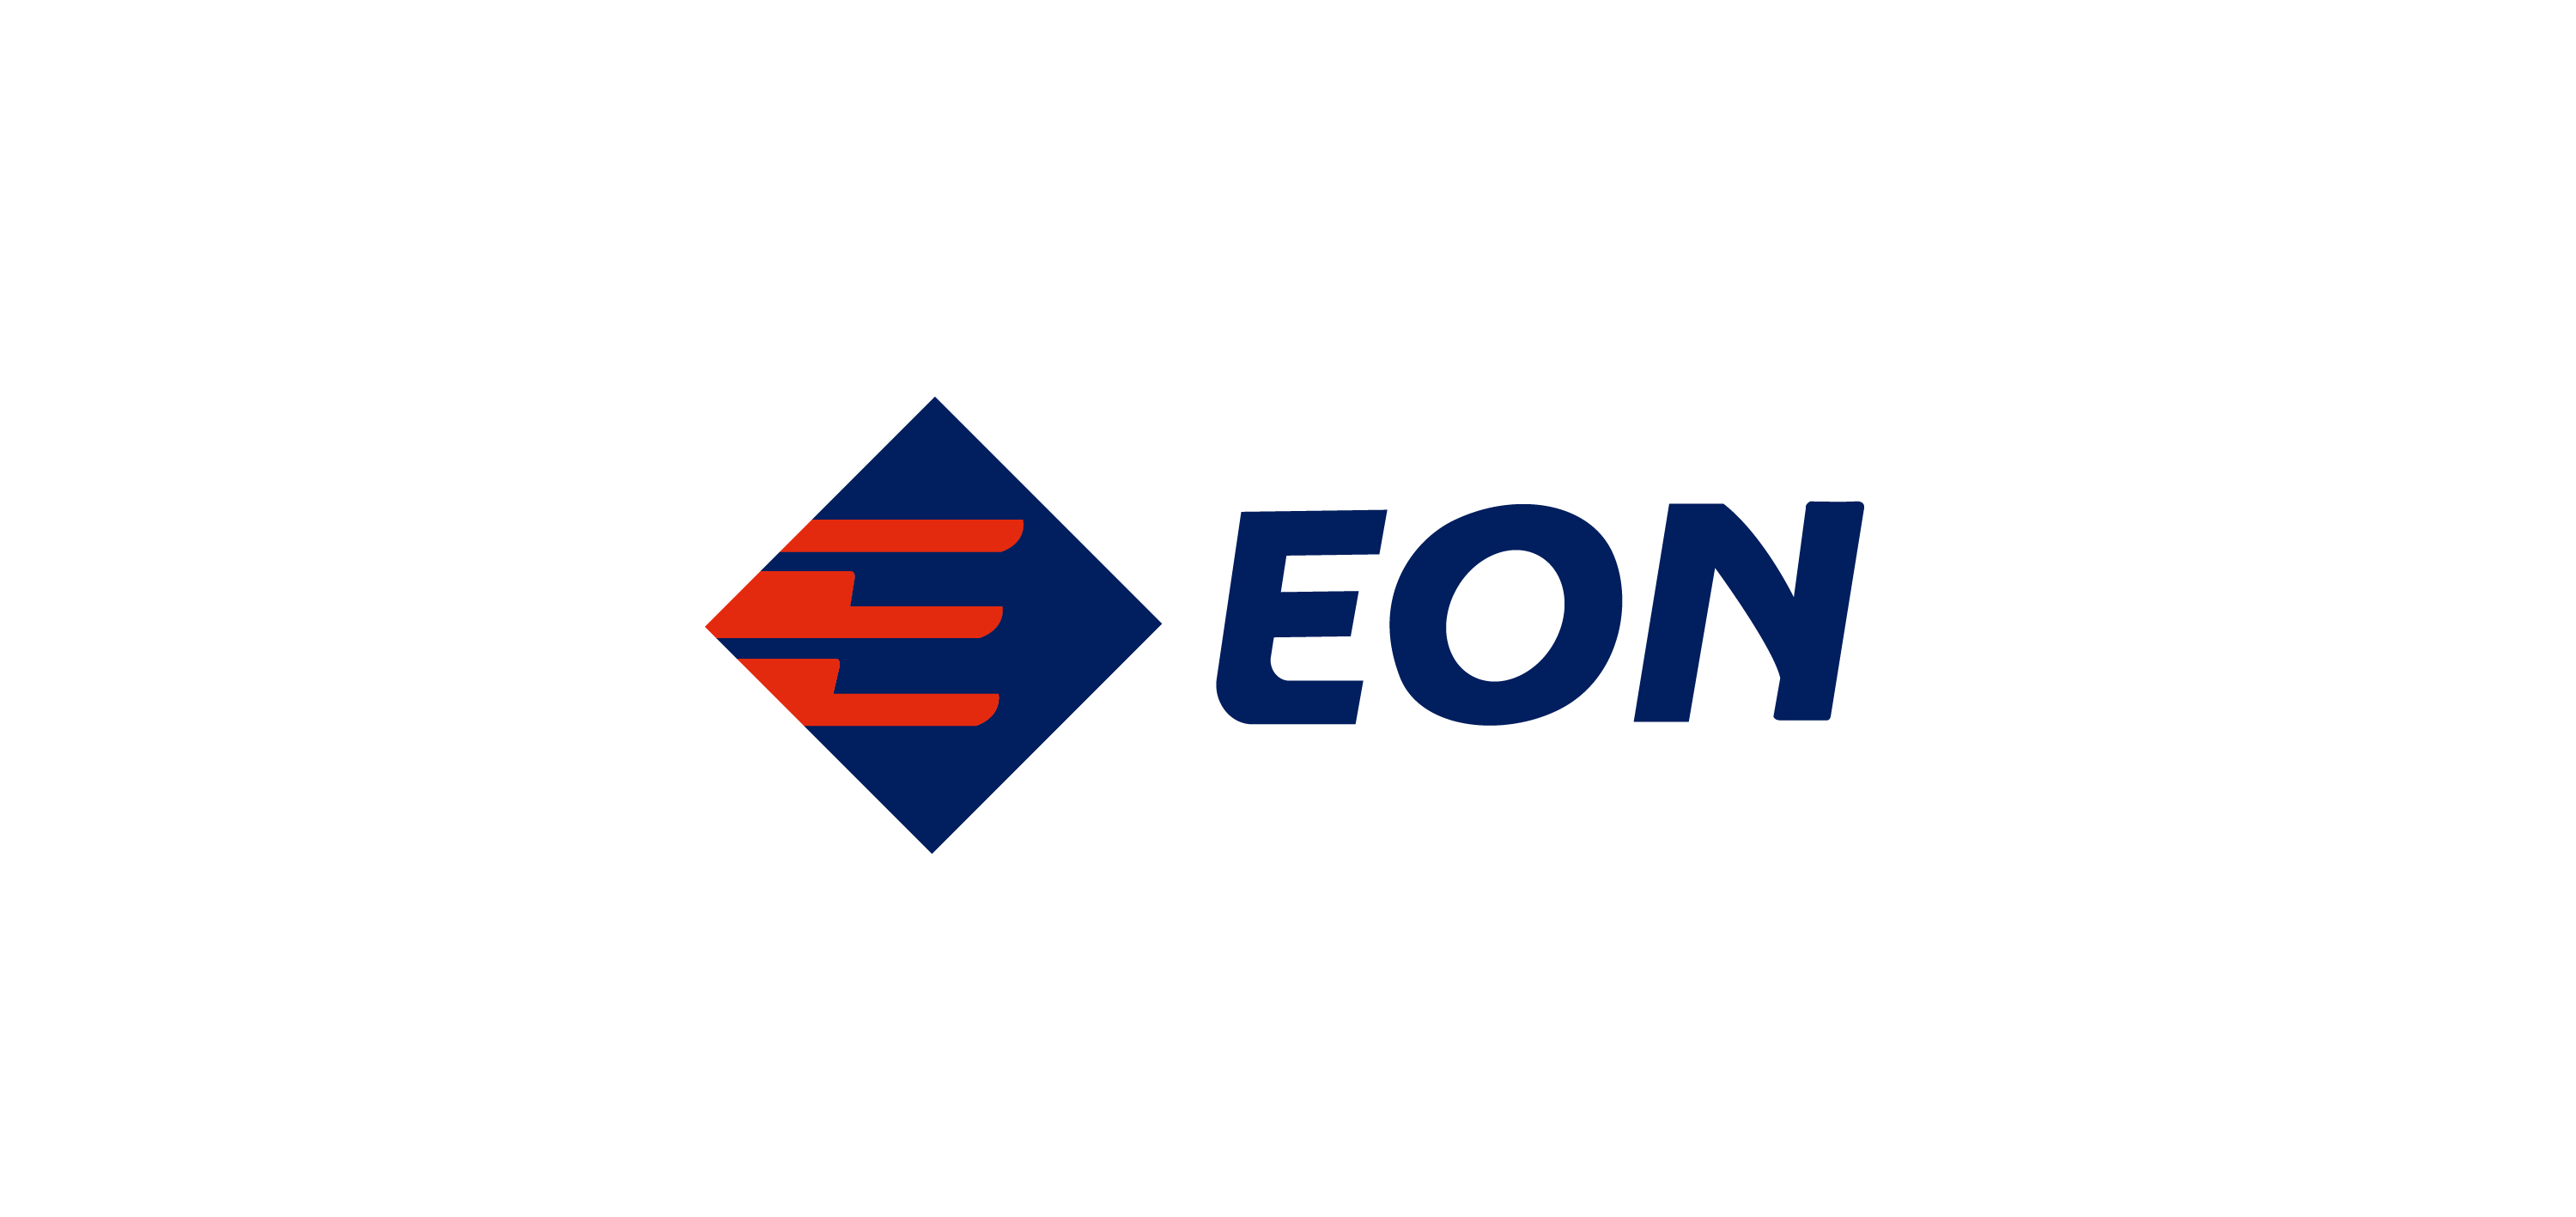 EON Edaran Otomobil Logo